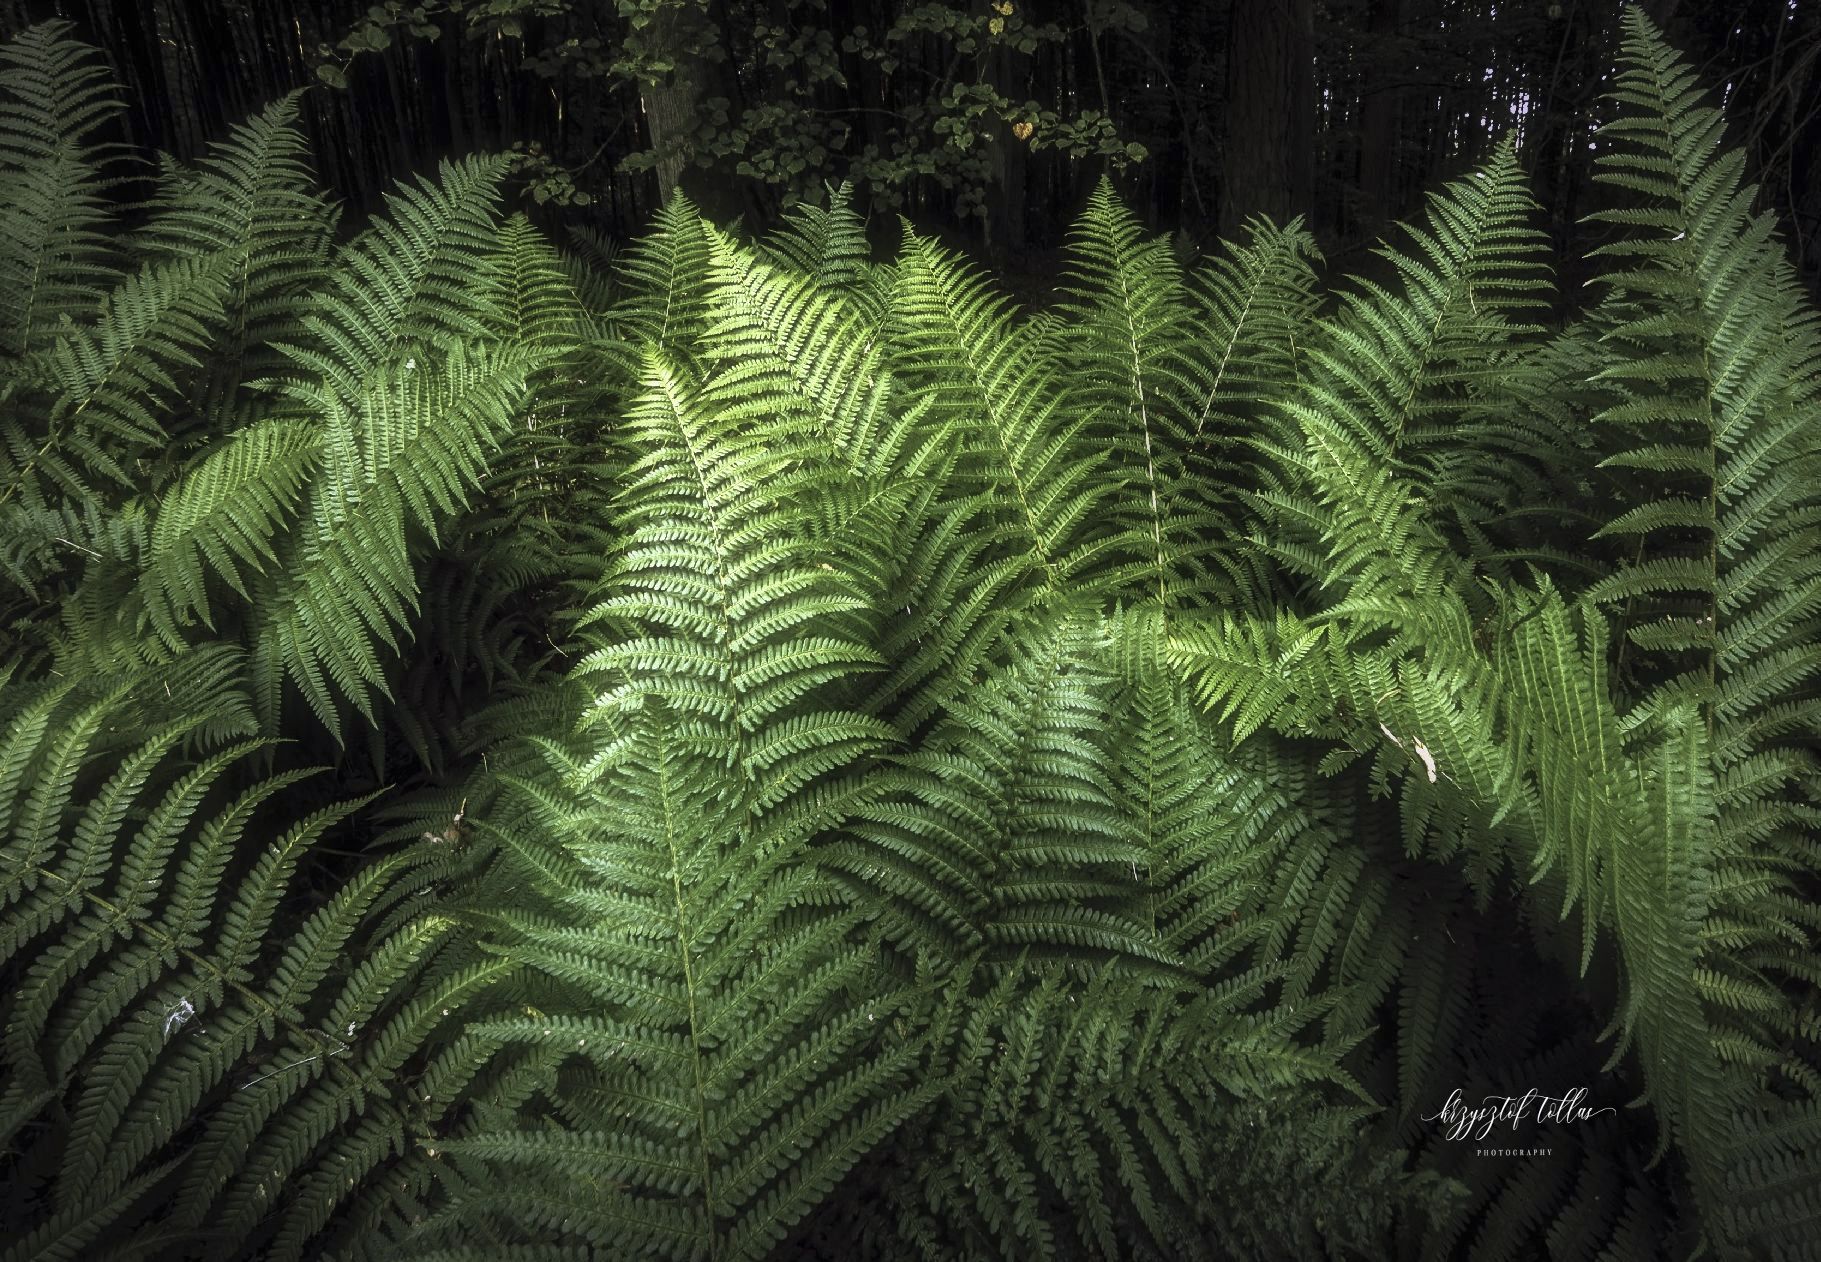 Forest fern, nature, forest, summer, dawn, light, Nikon, Krzysztof Tollas